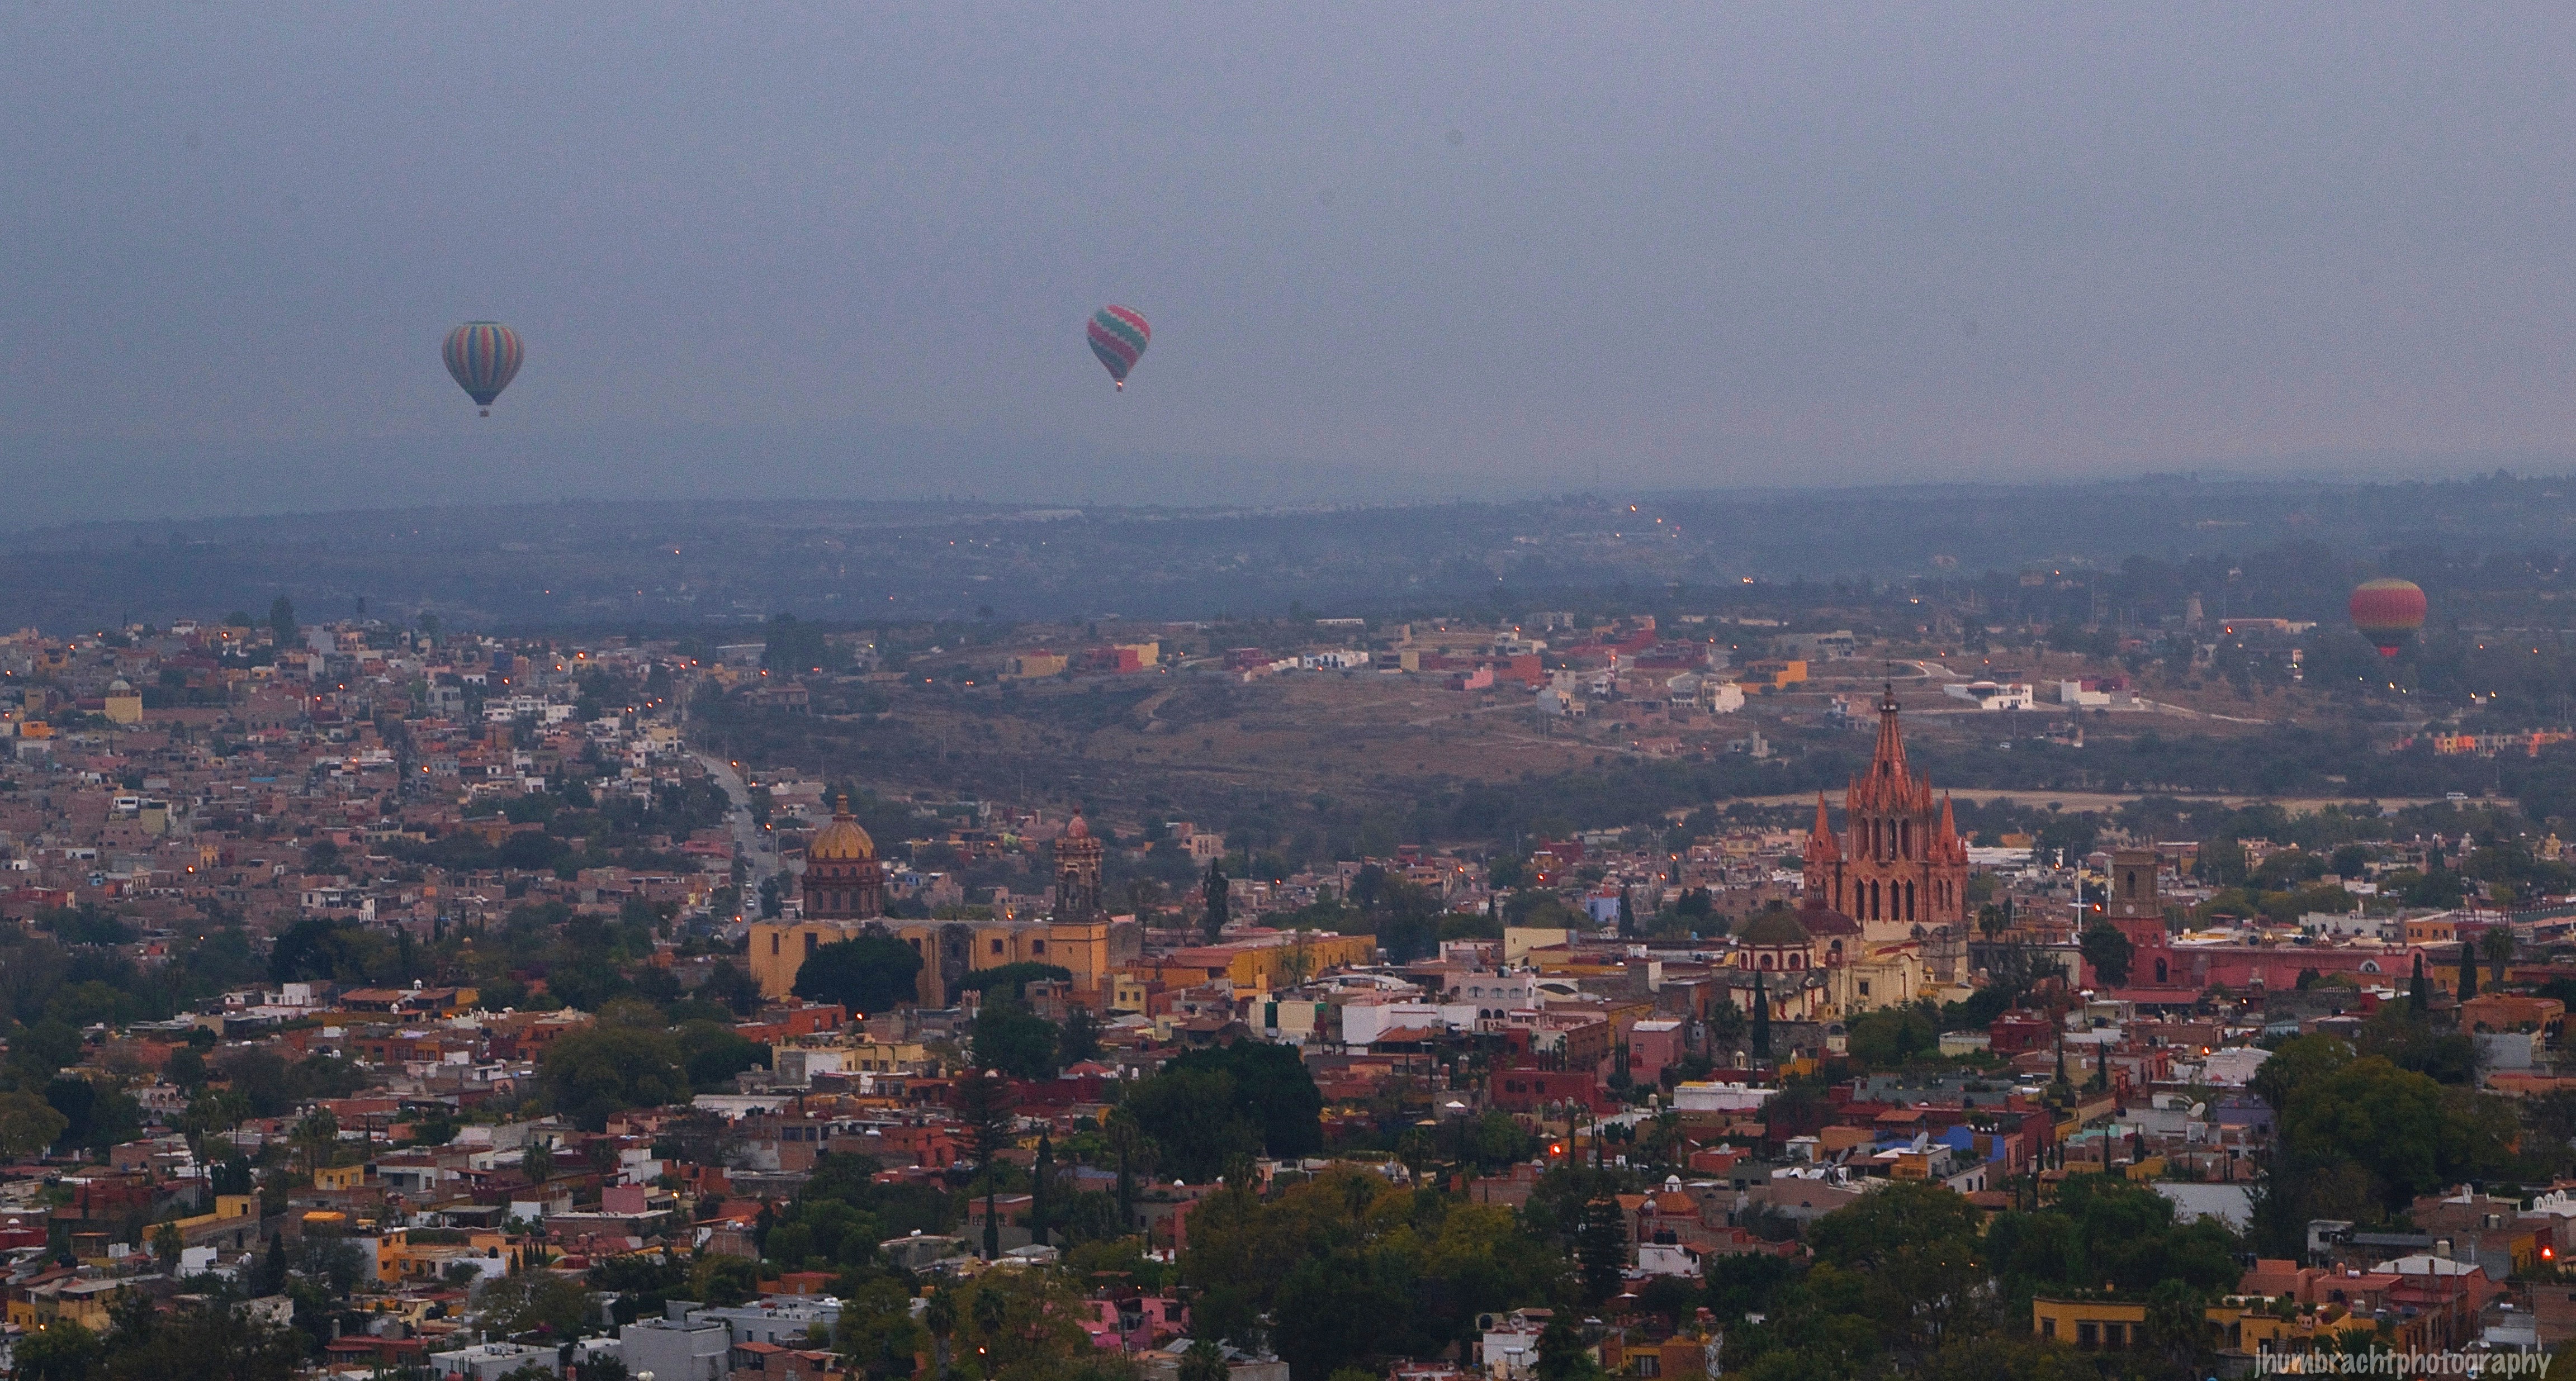 Sunrise San Miguel de Allende Mexico photo taken by Indiana Architectural Photographer Jason Humbracht in 2015